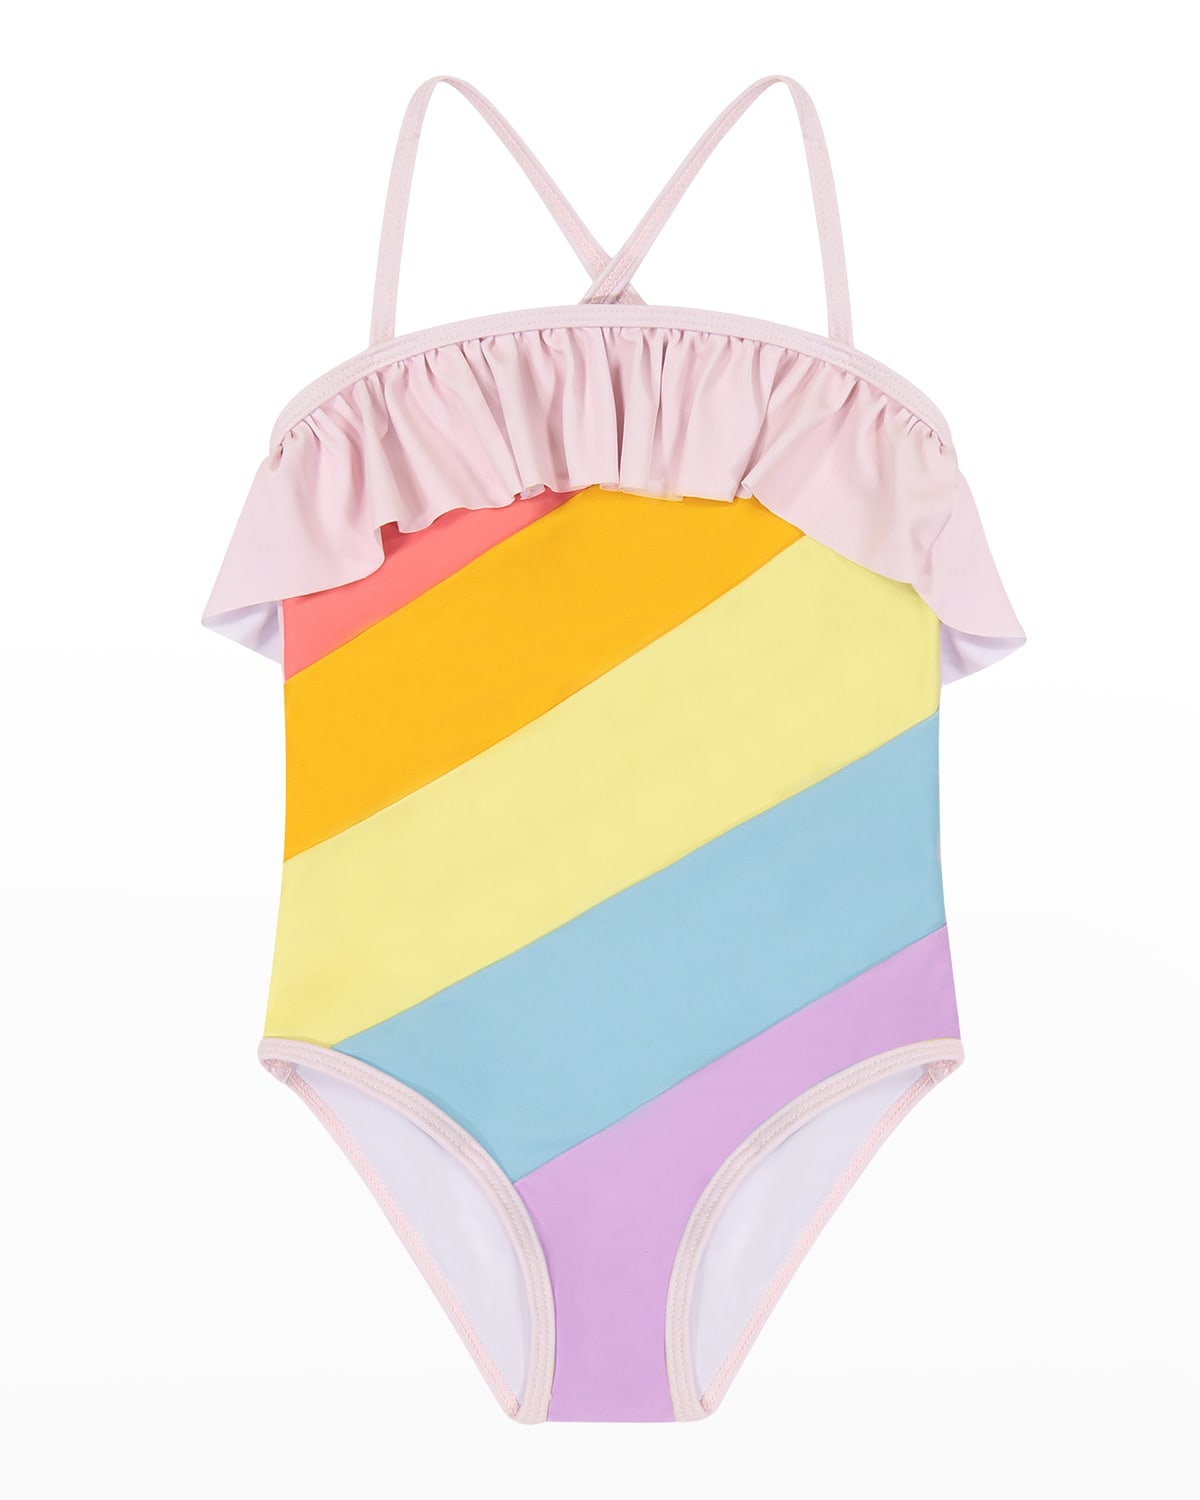 Andy & Evan Kids' Girl's Rainbow-print One-piece Swimsuit